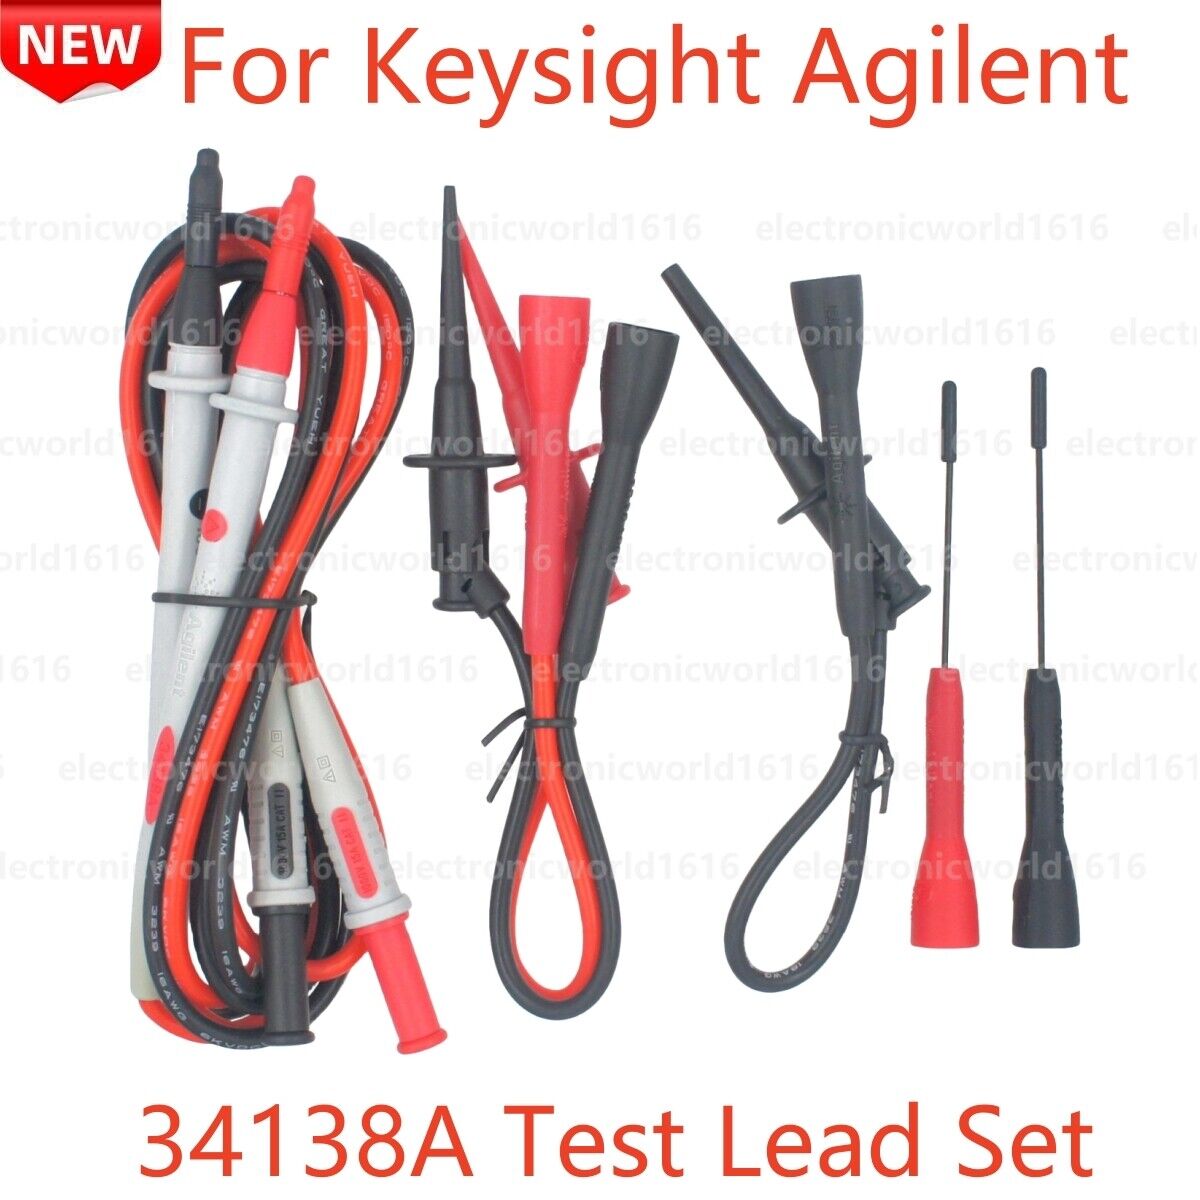 For Keysight Agilent 34138A Test Leads Set Multimeter 1000V CATII Probes Kit New